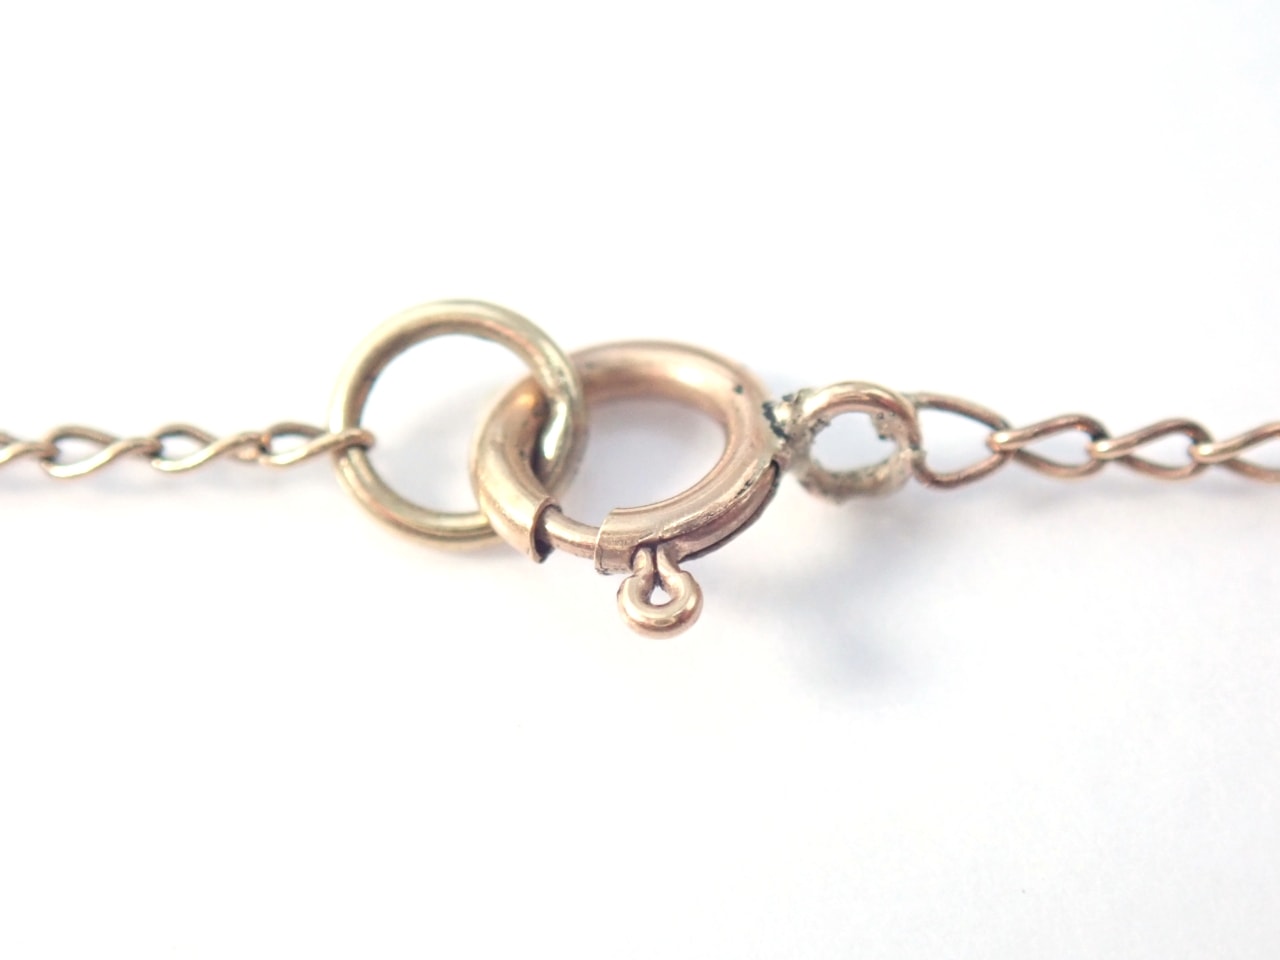 9K Gold Anchor Chain Bracelet - Anklet 8